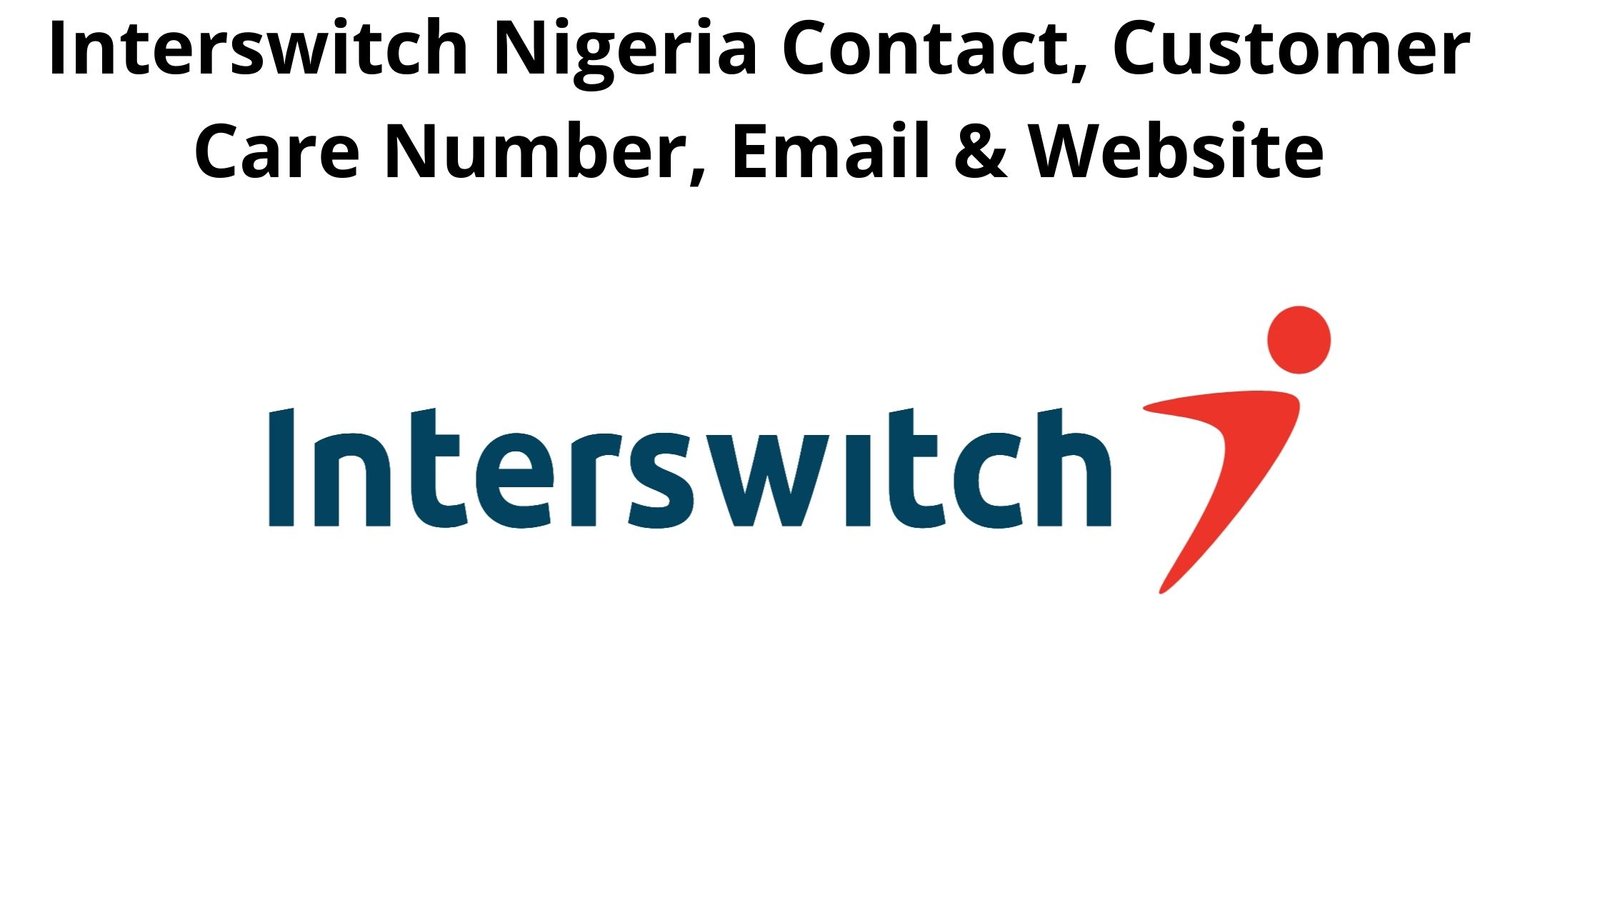 Interswitch Nigeria Contact